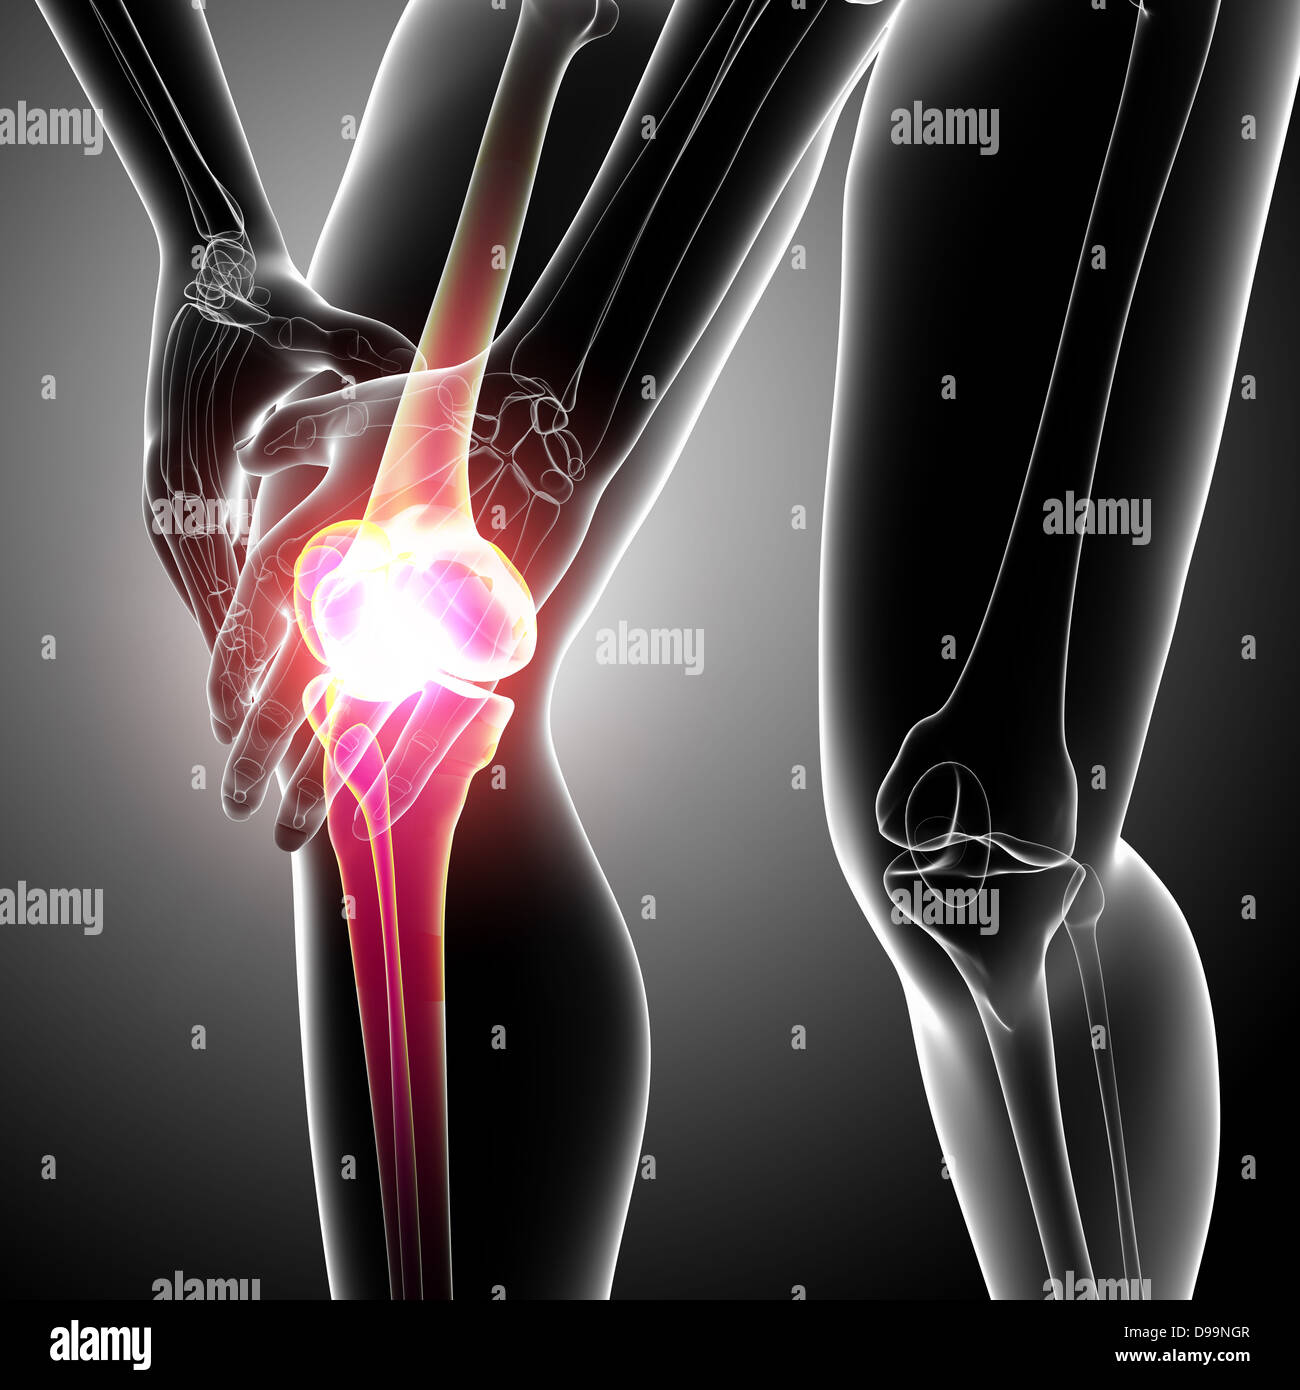 Human knee pain anatomy Stock Photo